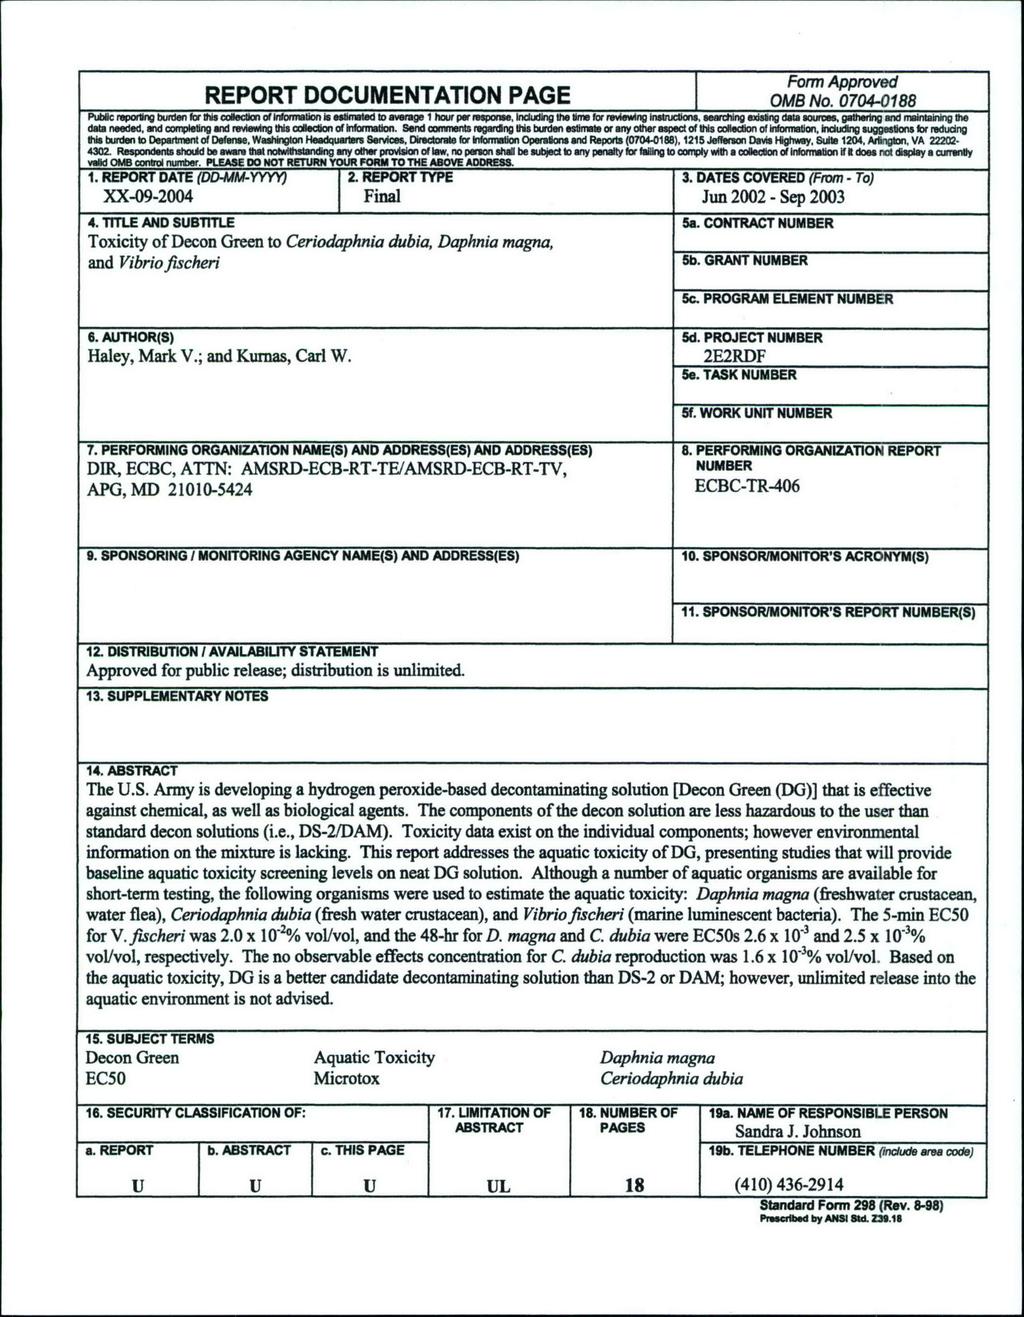 Form Approved REPORT DOCUMENTATION PAGE OMB No. 0704-0188 Pubic repmgw wda b 34 oeden= ctklm~mam tamednul Umawqs I Imwmur mae.